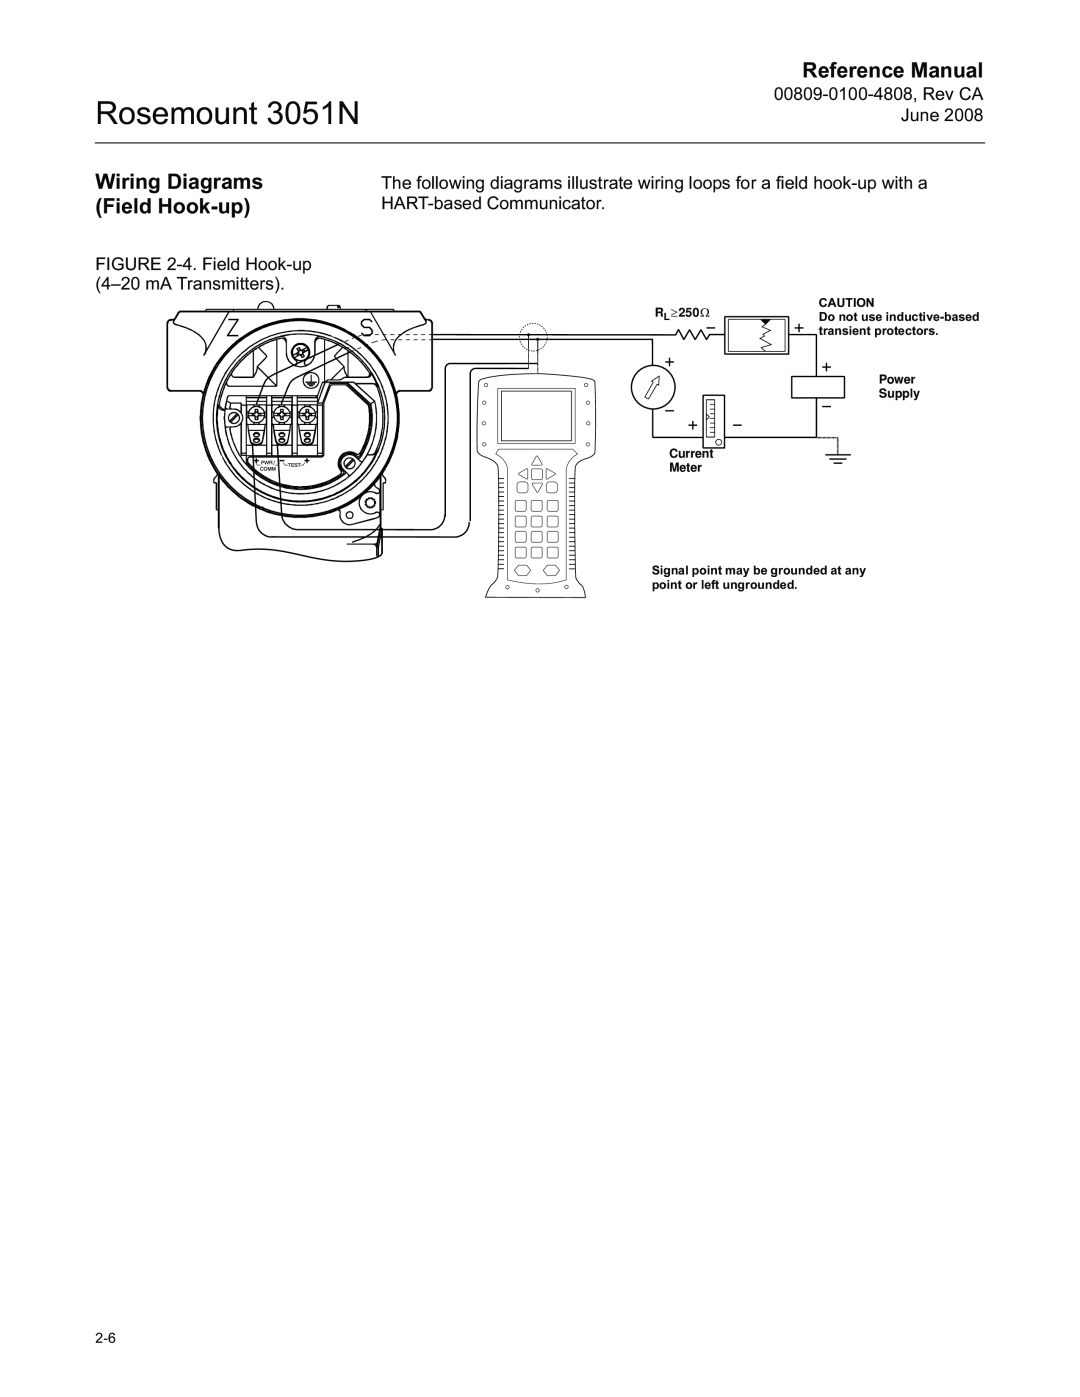 Emerson manual Wiring Diagrams Field Hook-up, Rosemount 3051N, Reference Manual, 00809-0100-4808,Rev CA June 